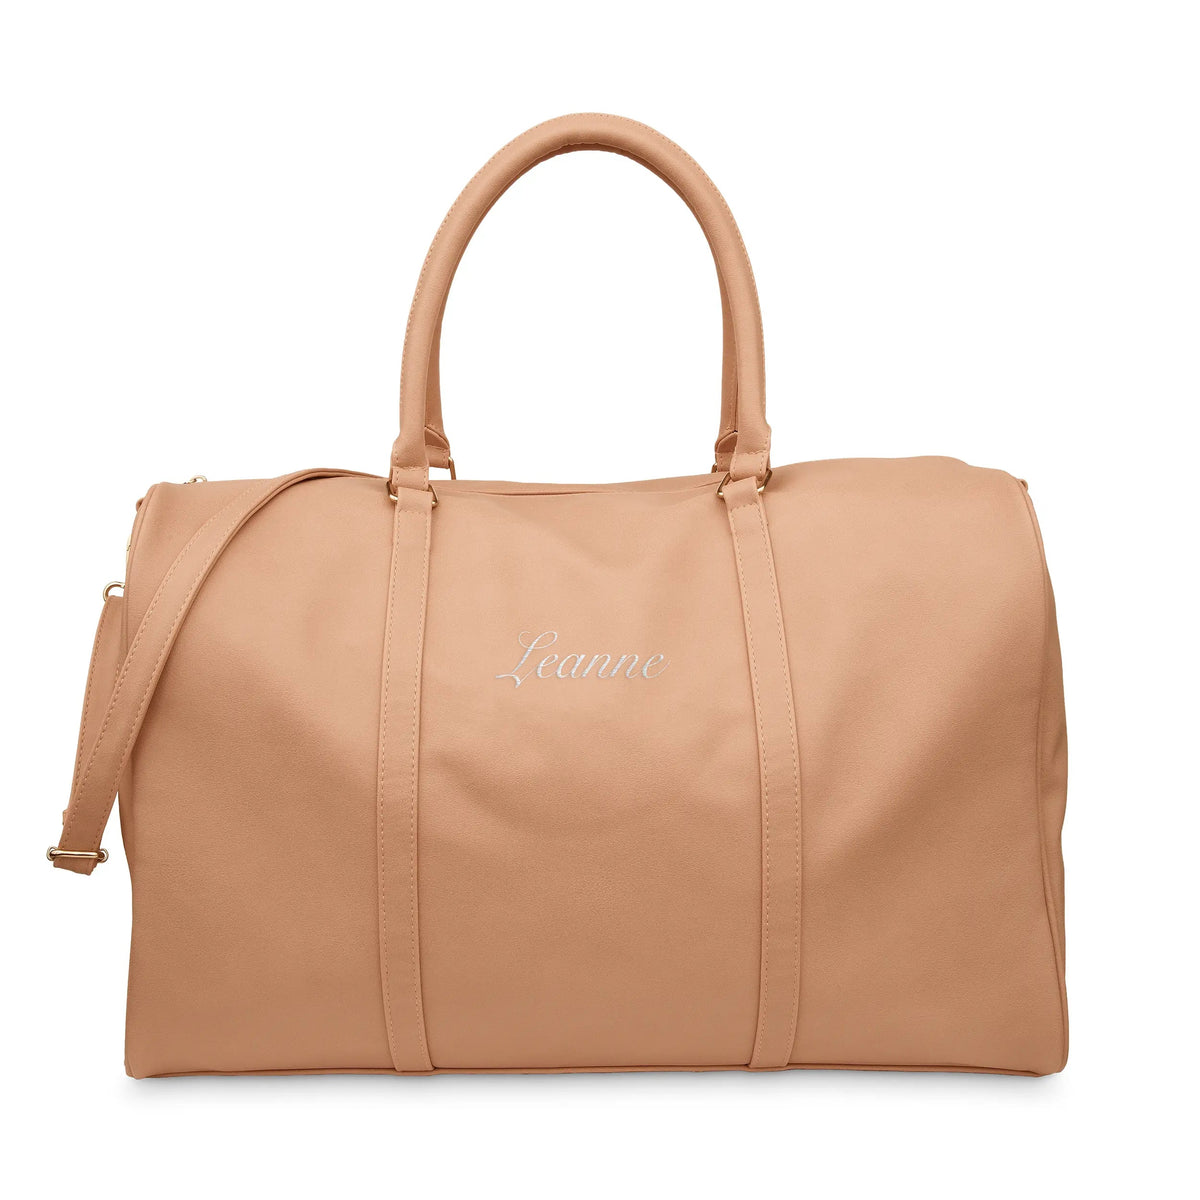 Bags & Luggage - Women's Bags - Backpacks First Class Weekender